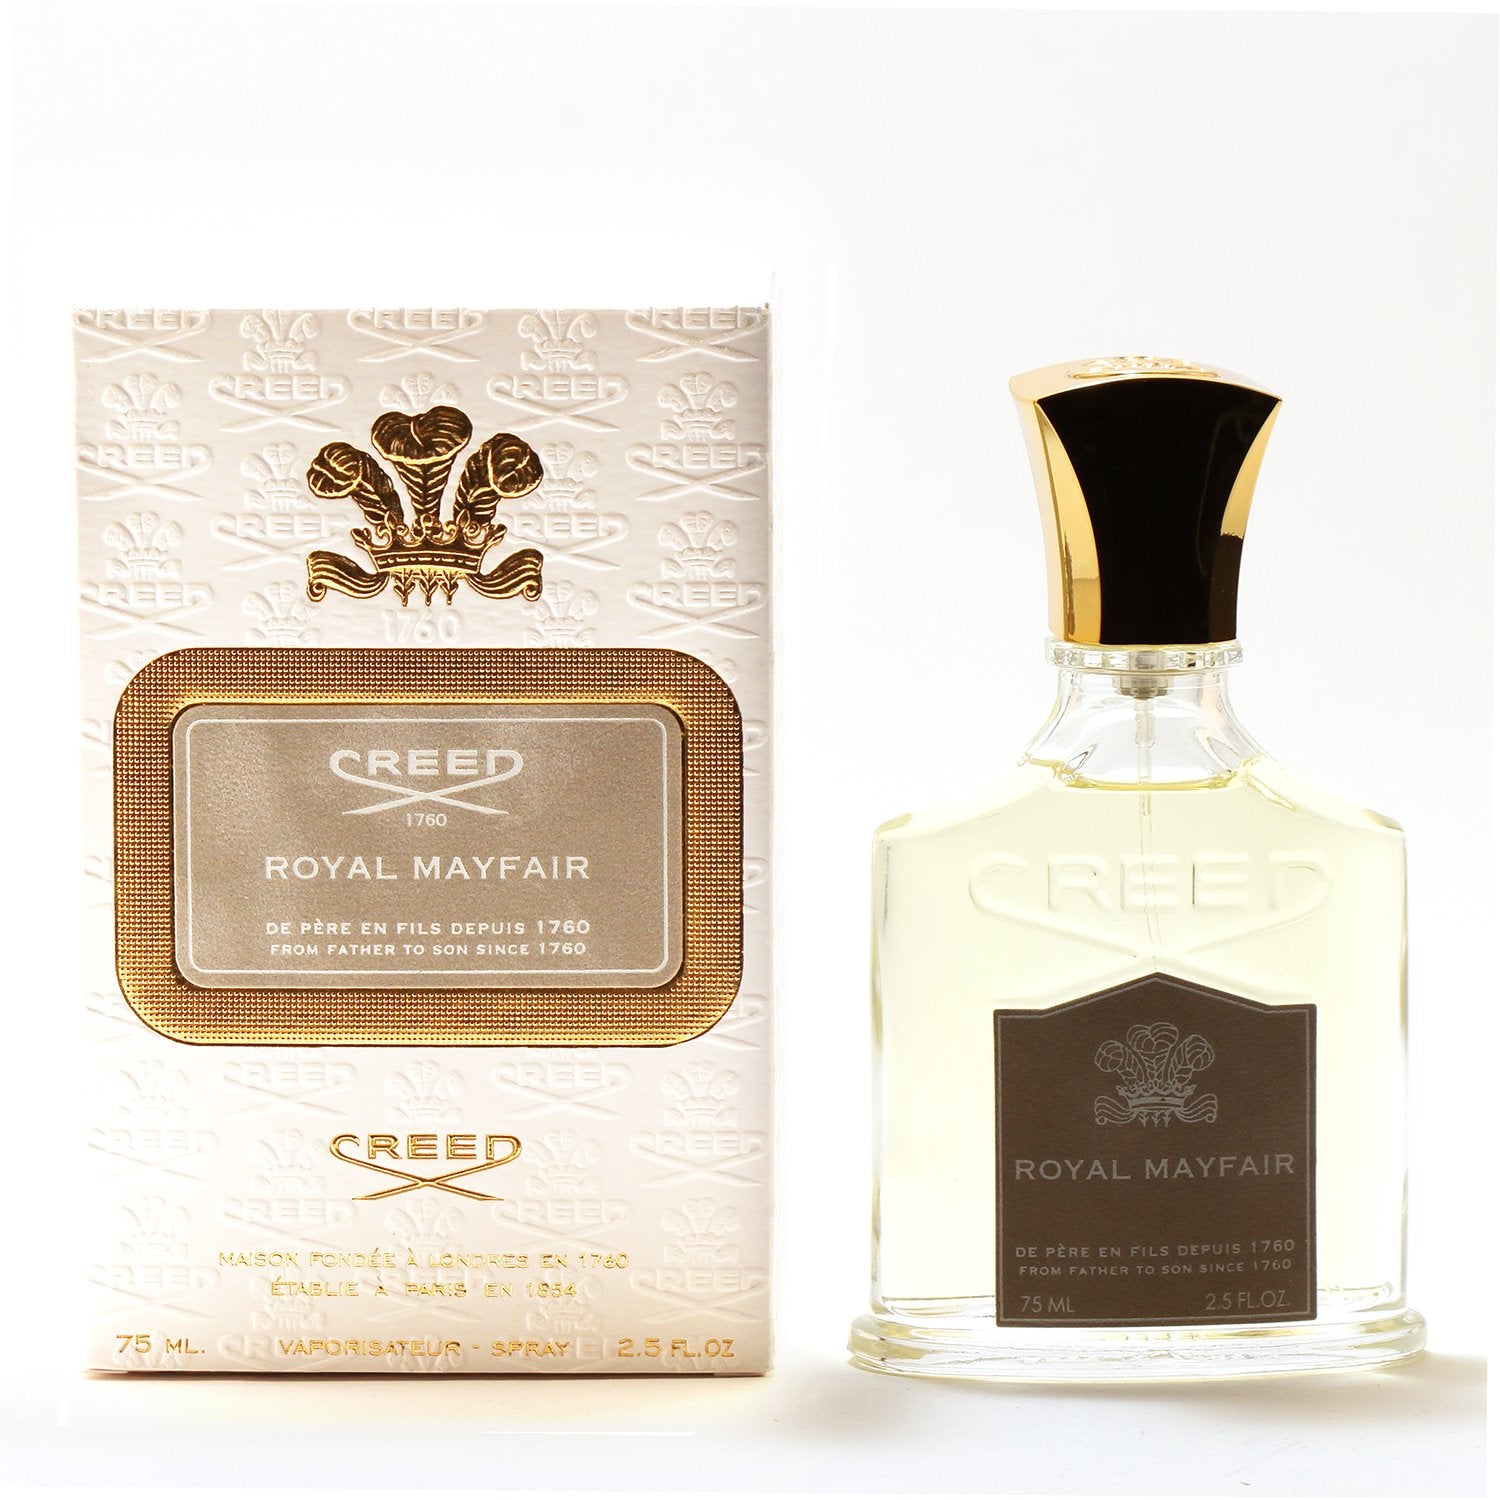 Perfume - CREED ROYAL MAYFAIR FOR MEN - EAU DE PARFUM SPRAY, 2.5 OZ